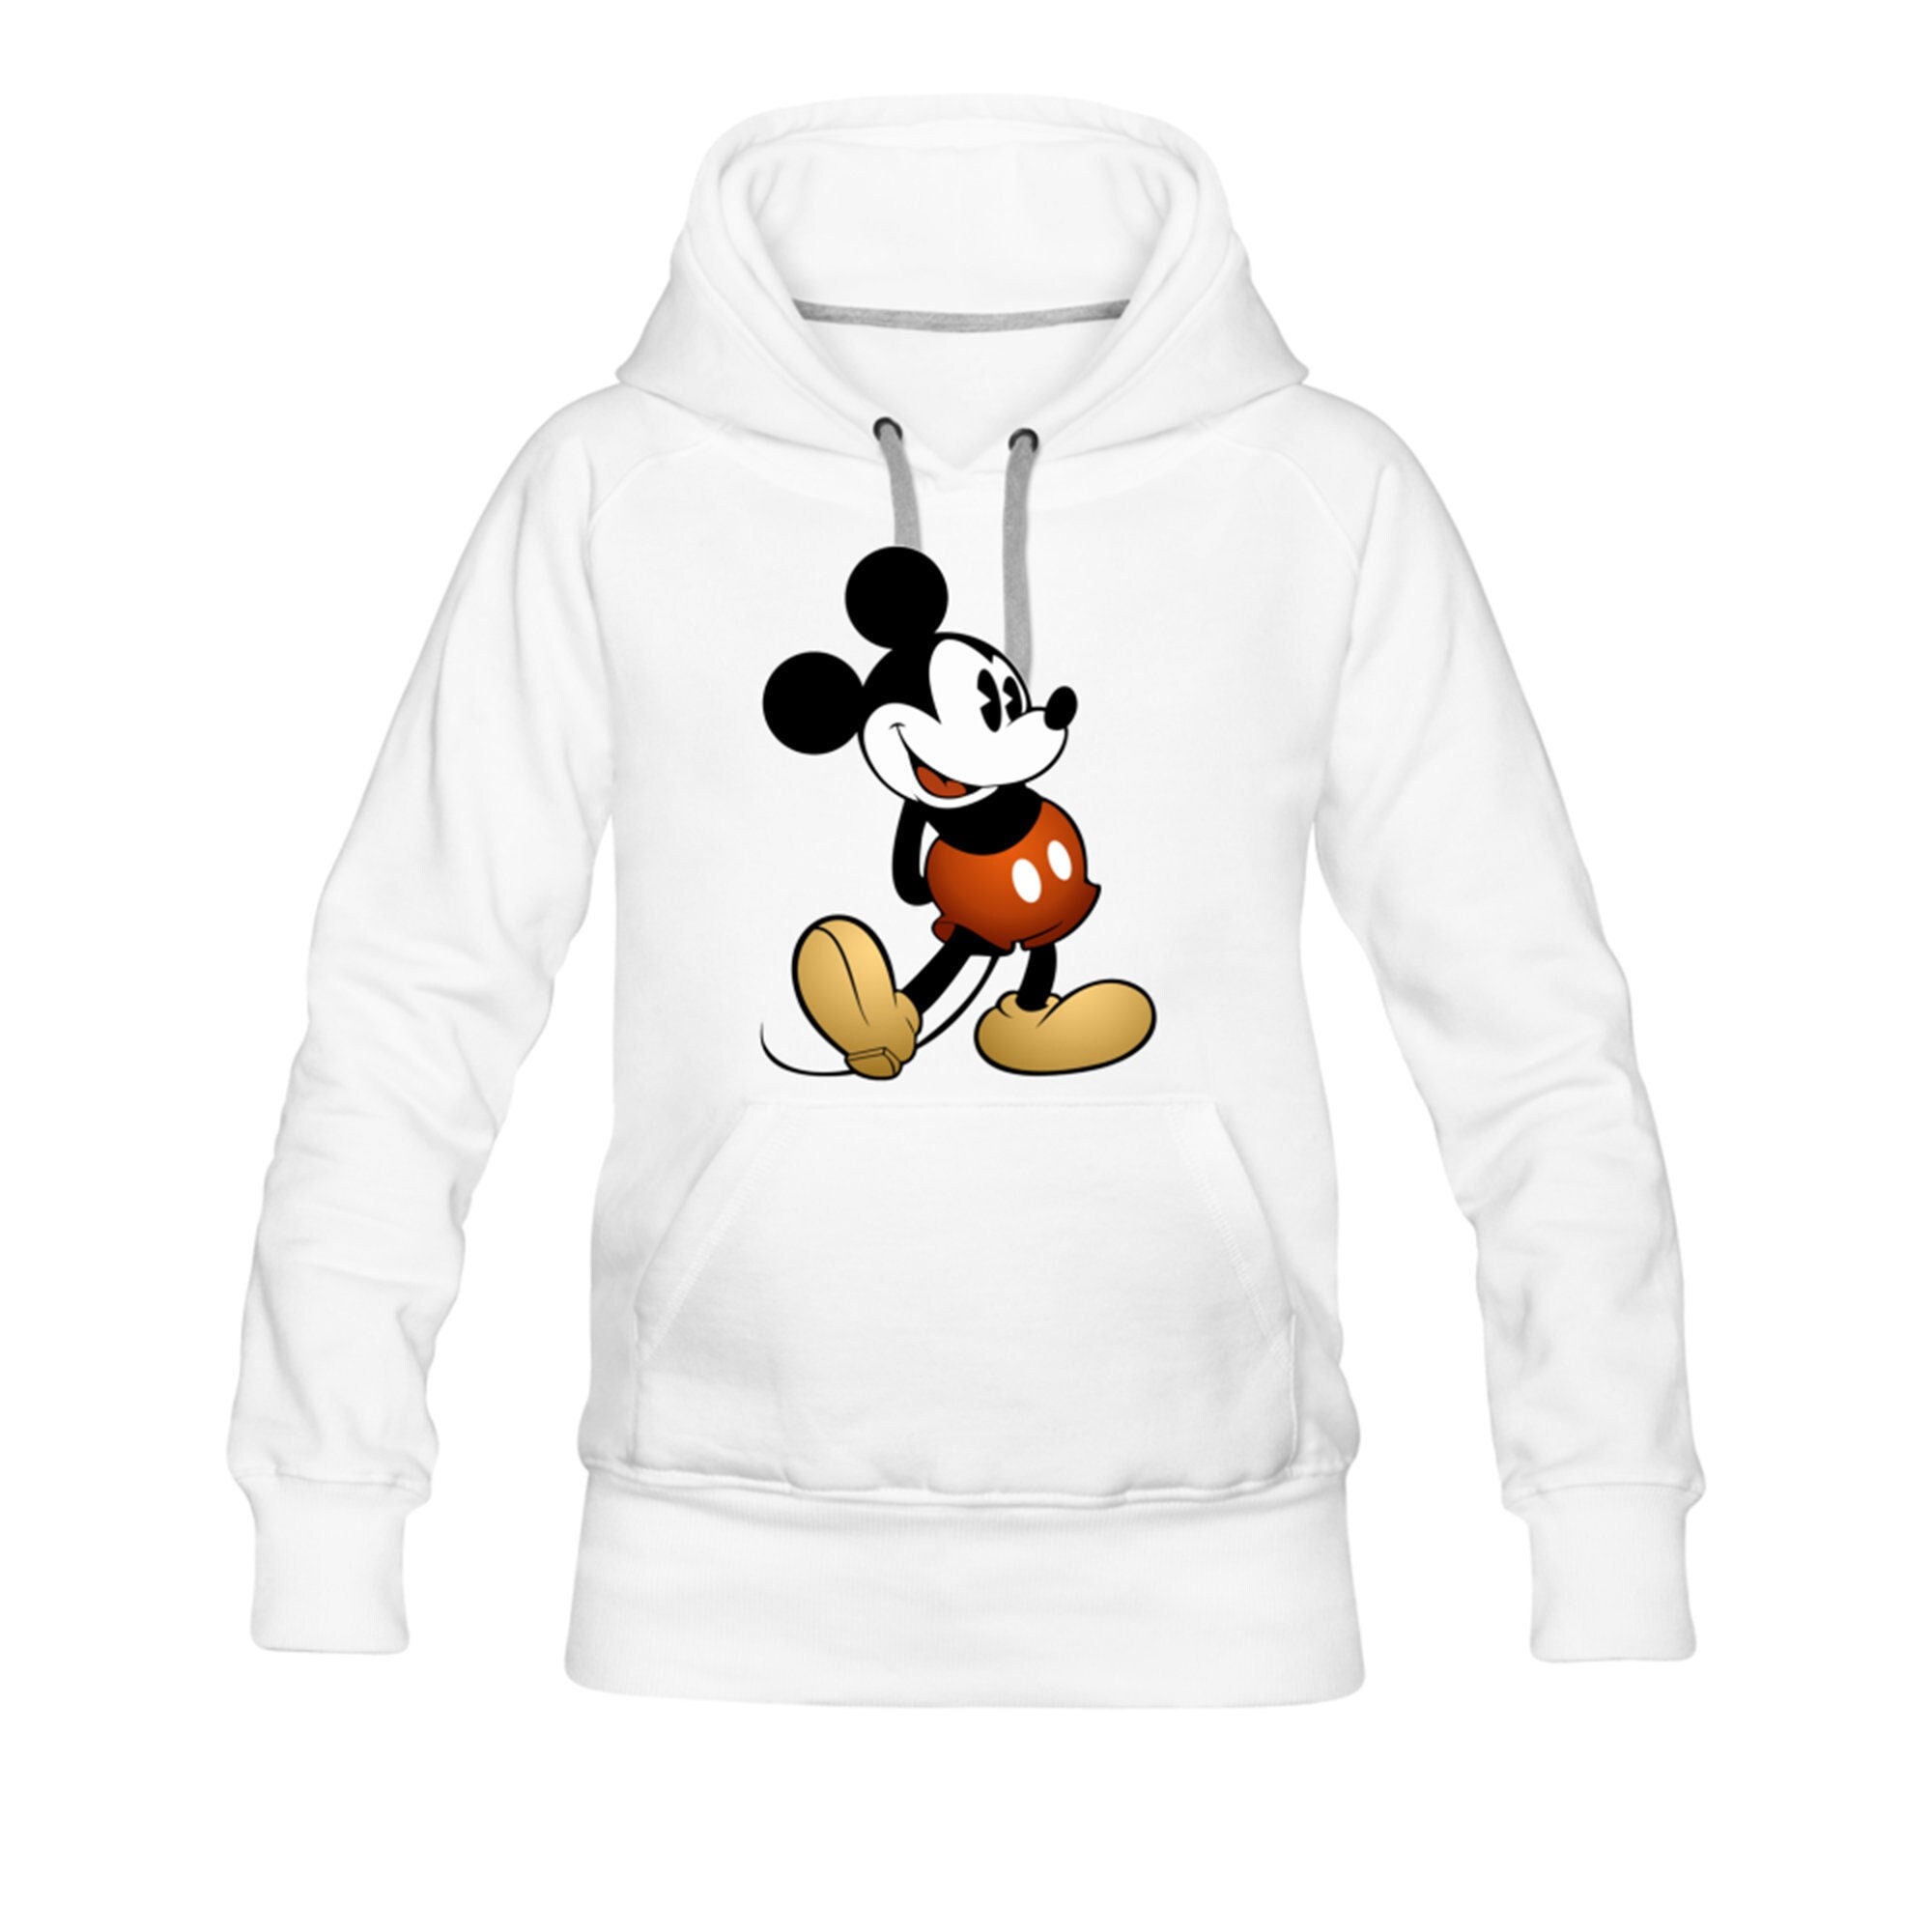 Kleding Herenkleding Hoodies & Sweatshirts Sweatshirts Mickey Mouse Disney White Sweatshirt Size Medium 